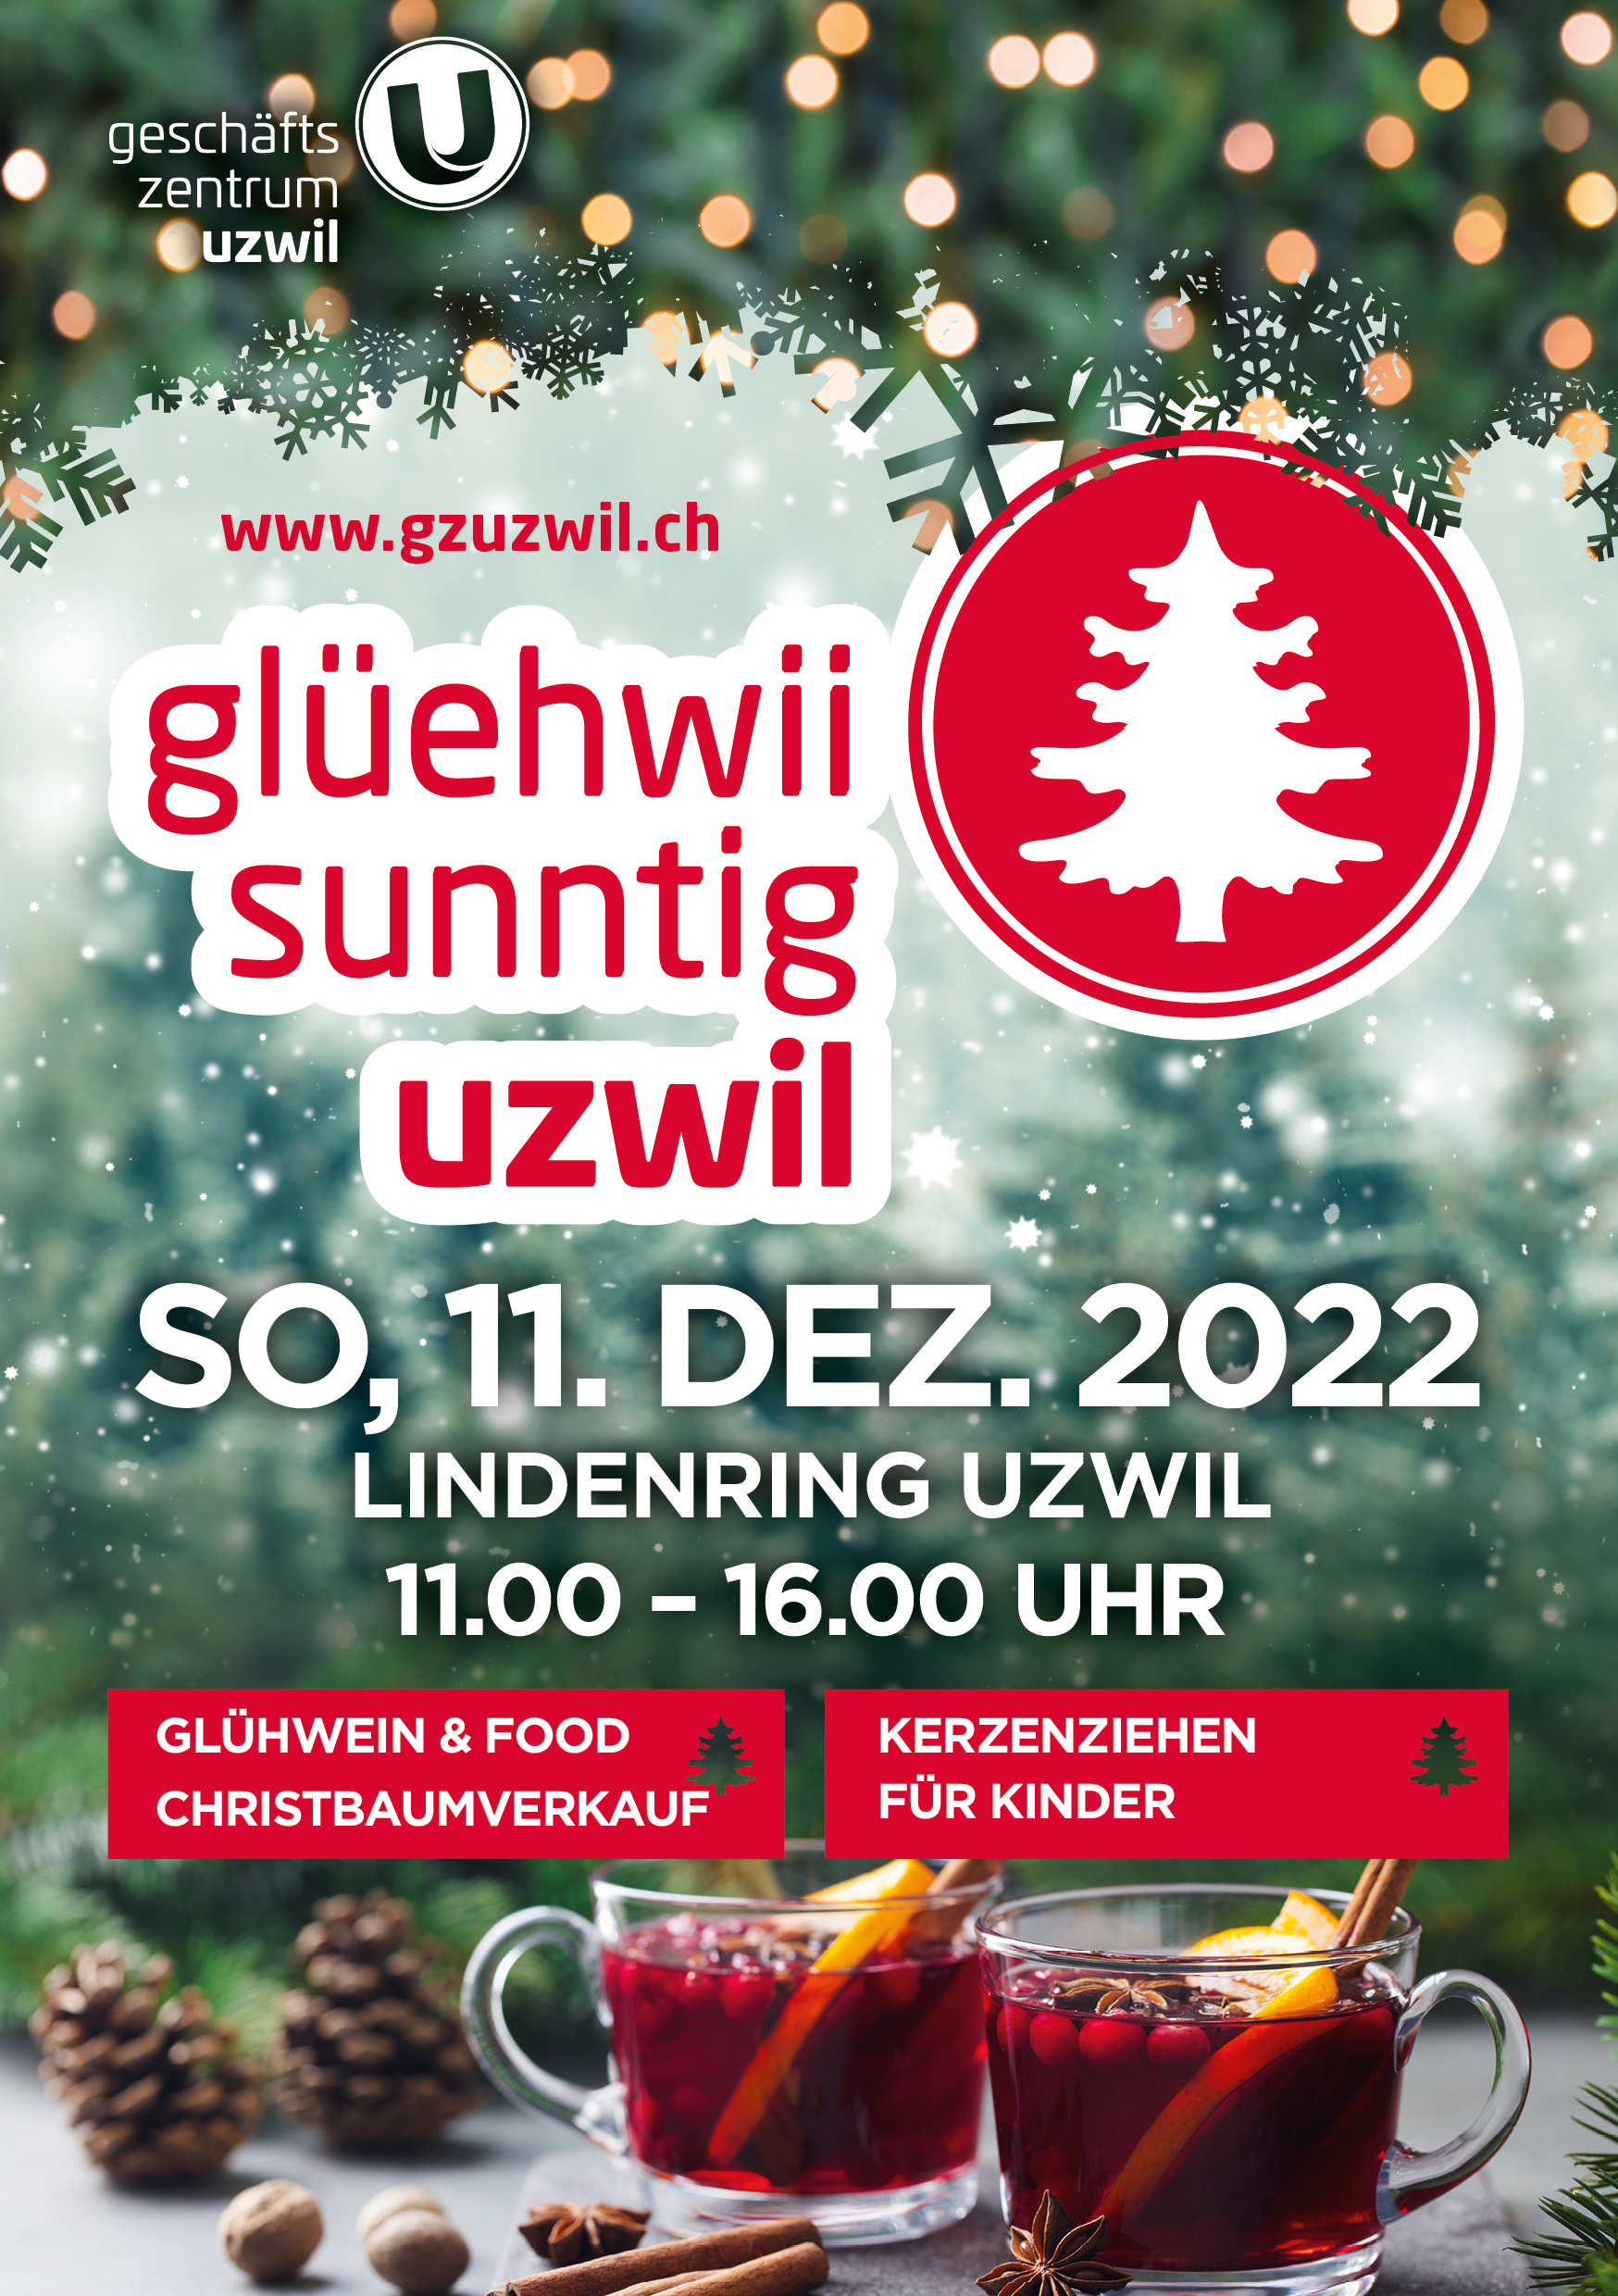 GZU_Gluehweihnsonntag_2022_Flyer_A5